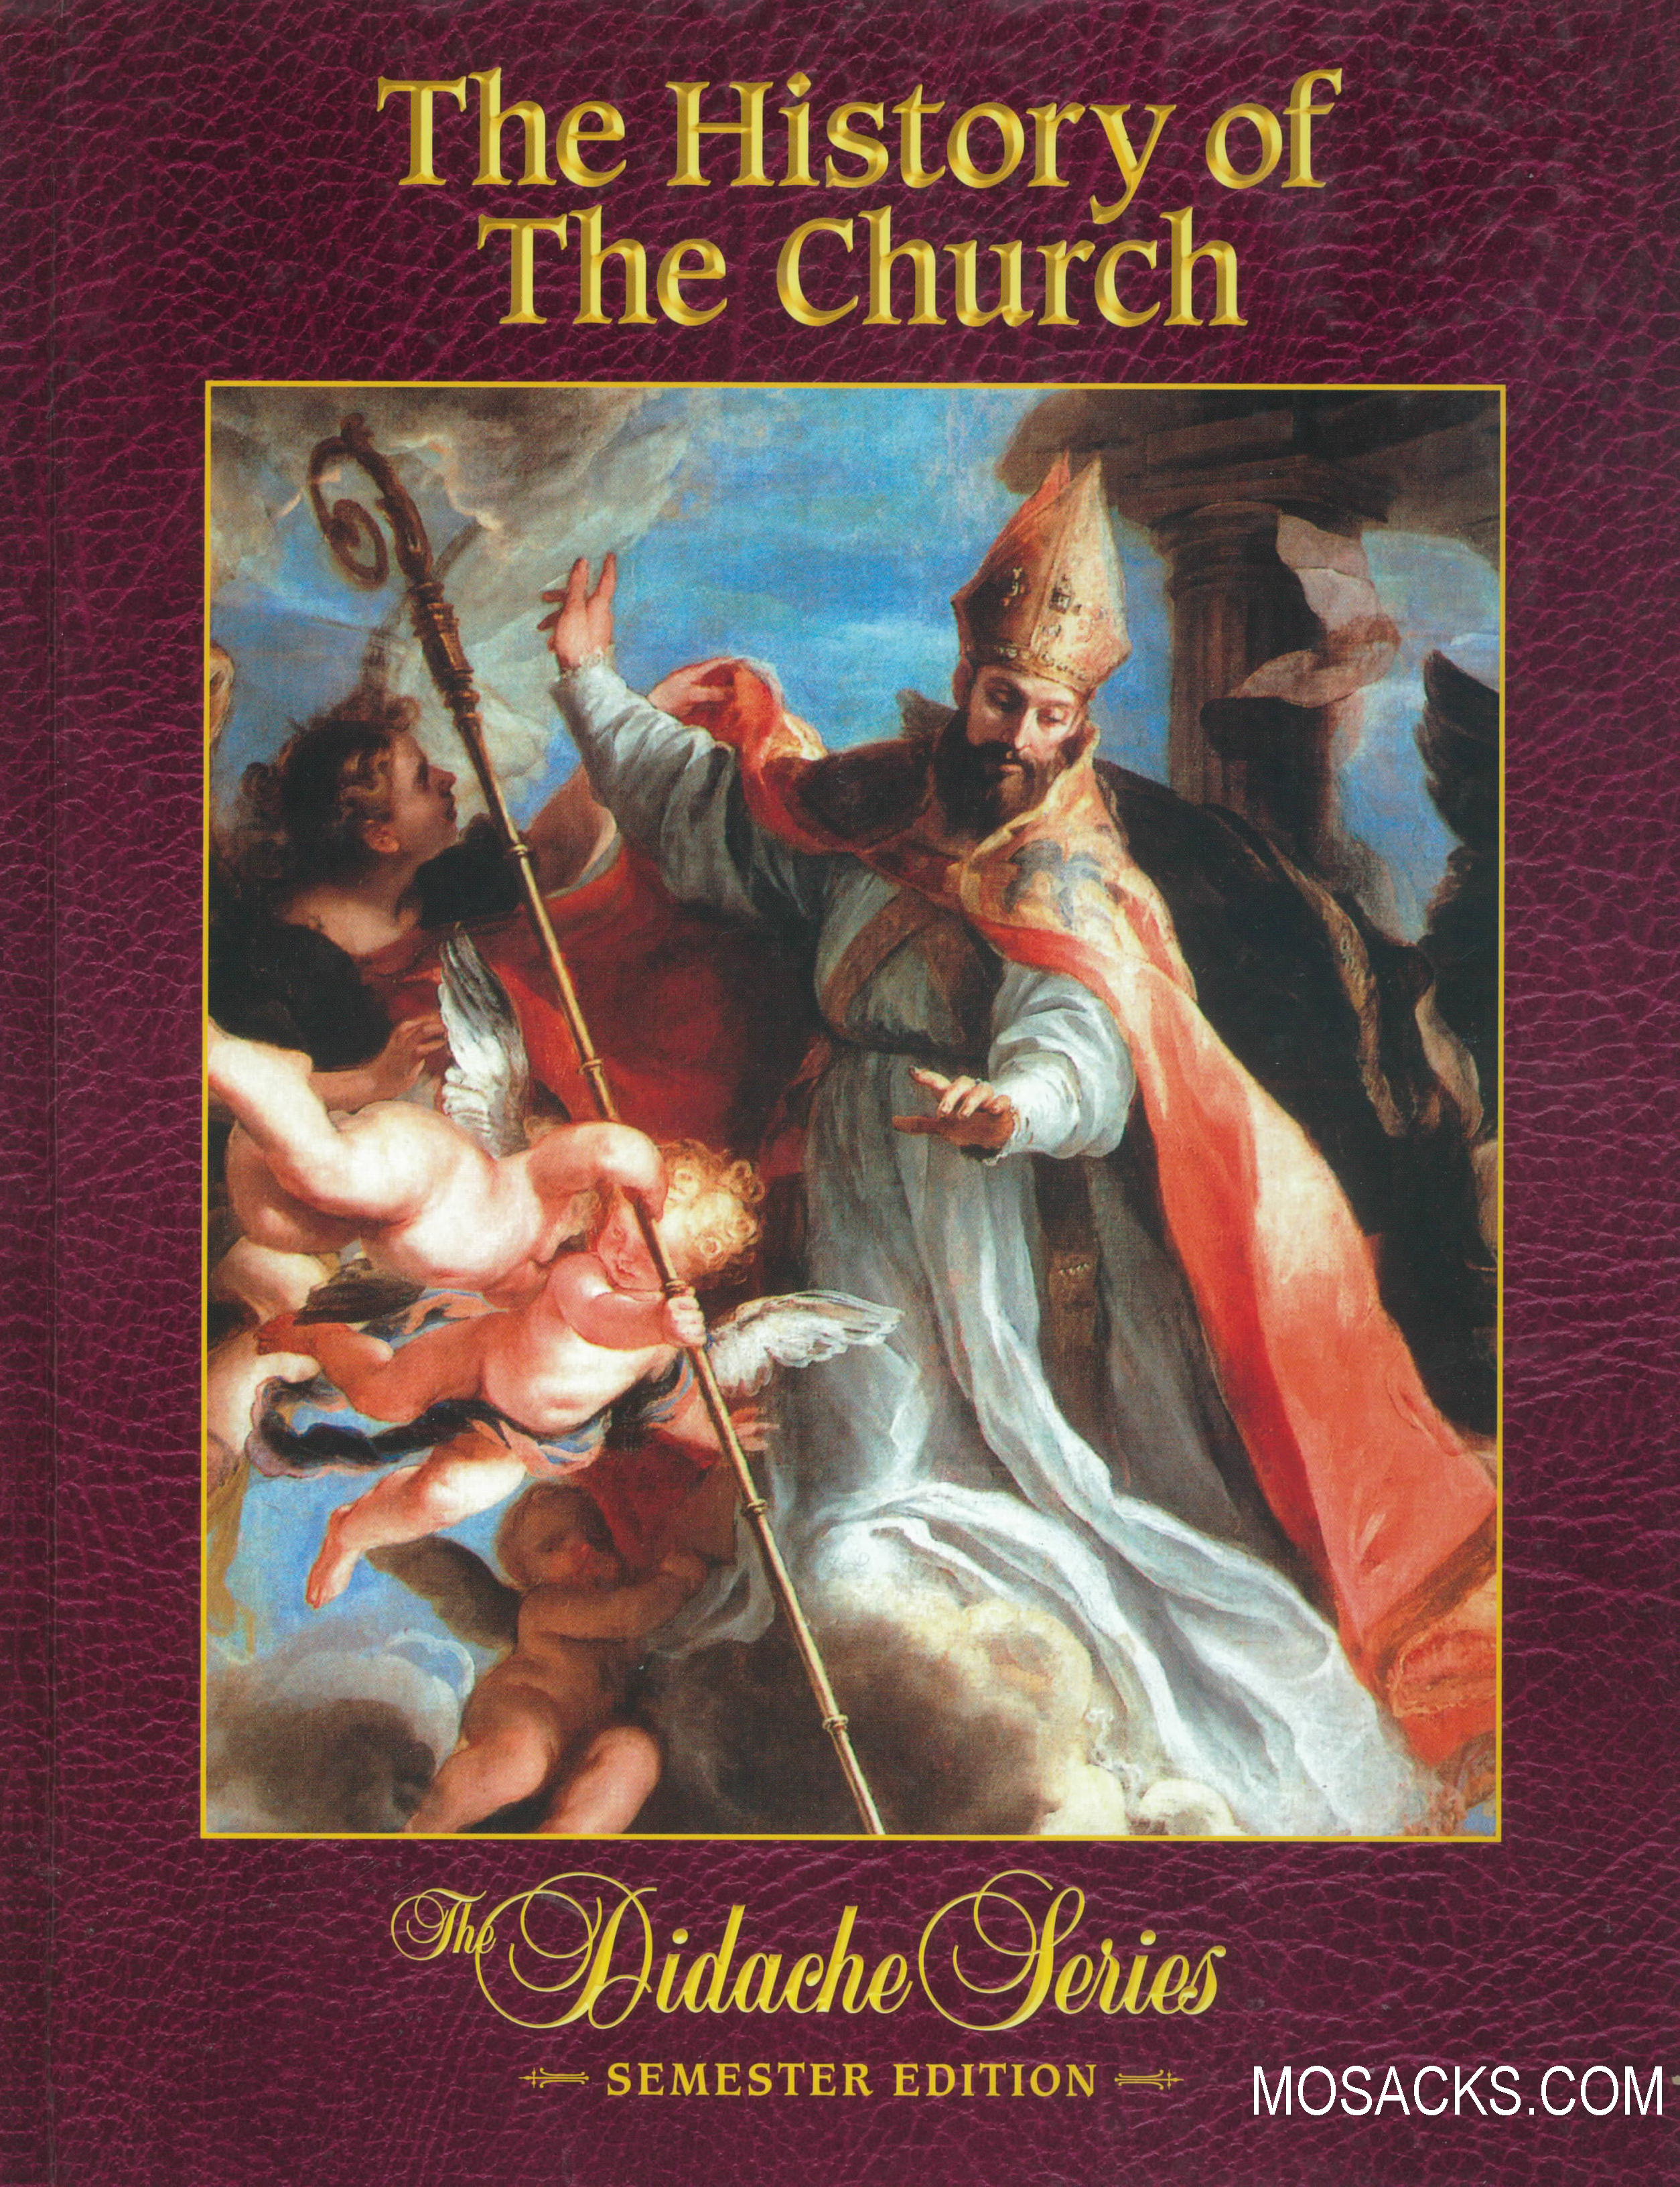 The History of the Church by Very Rev. Peter V. Armenio 445-45150